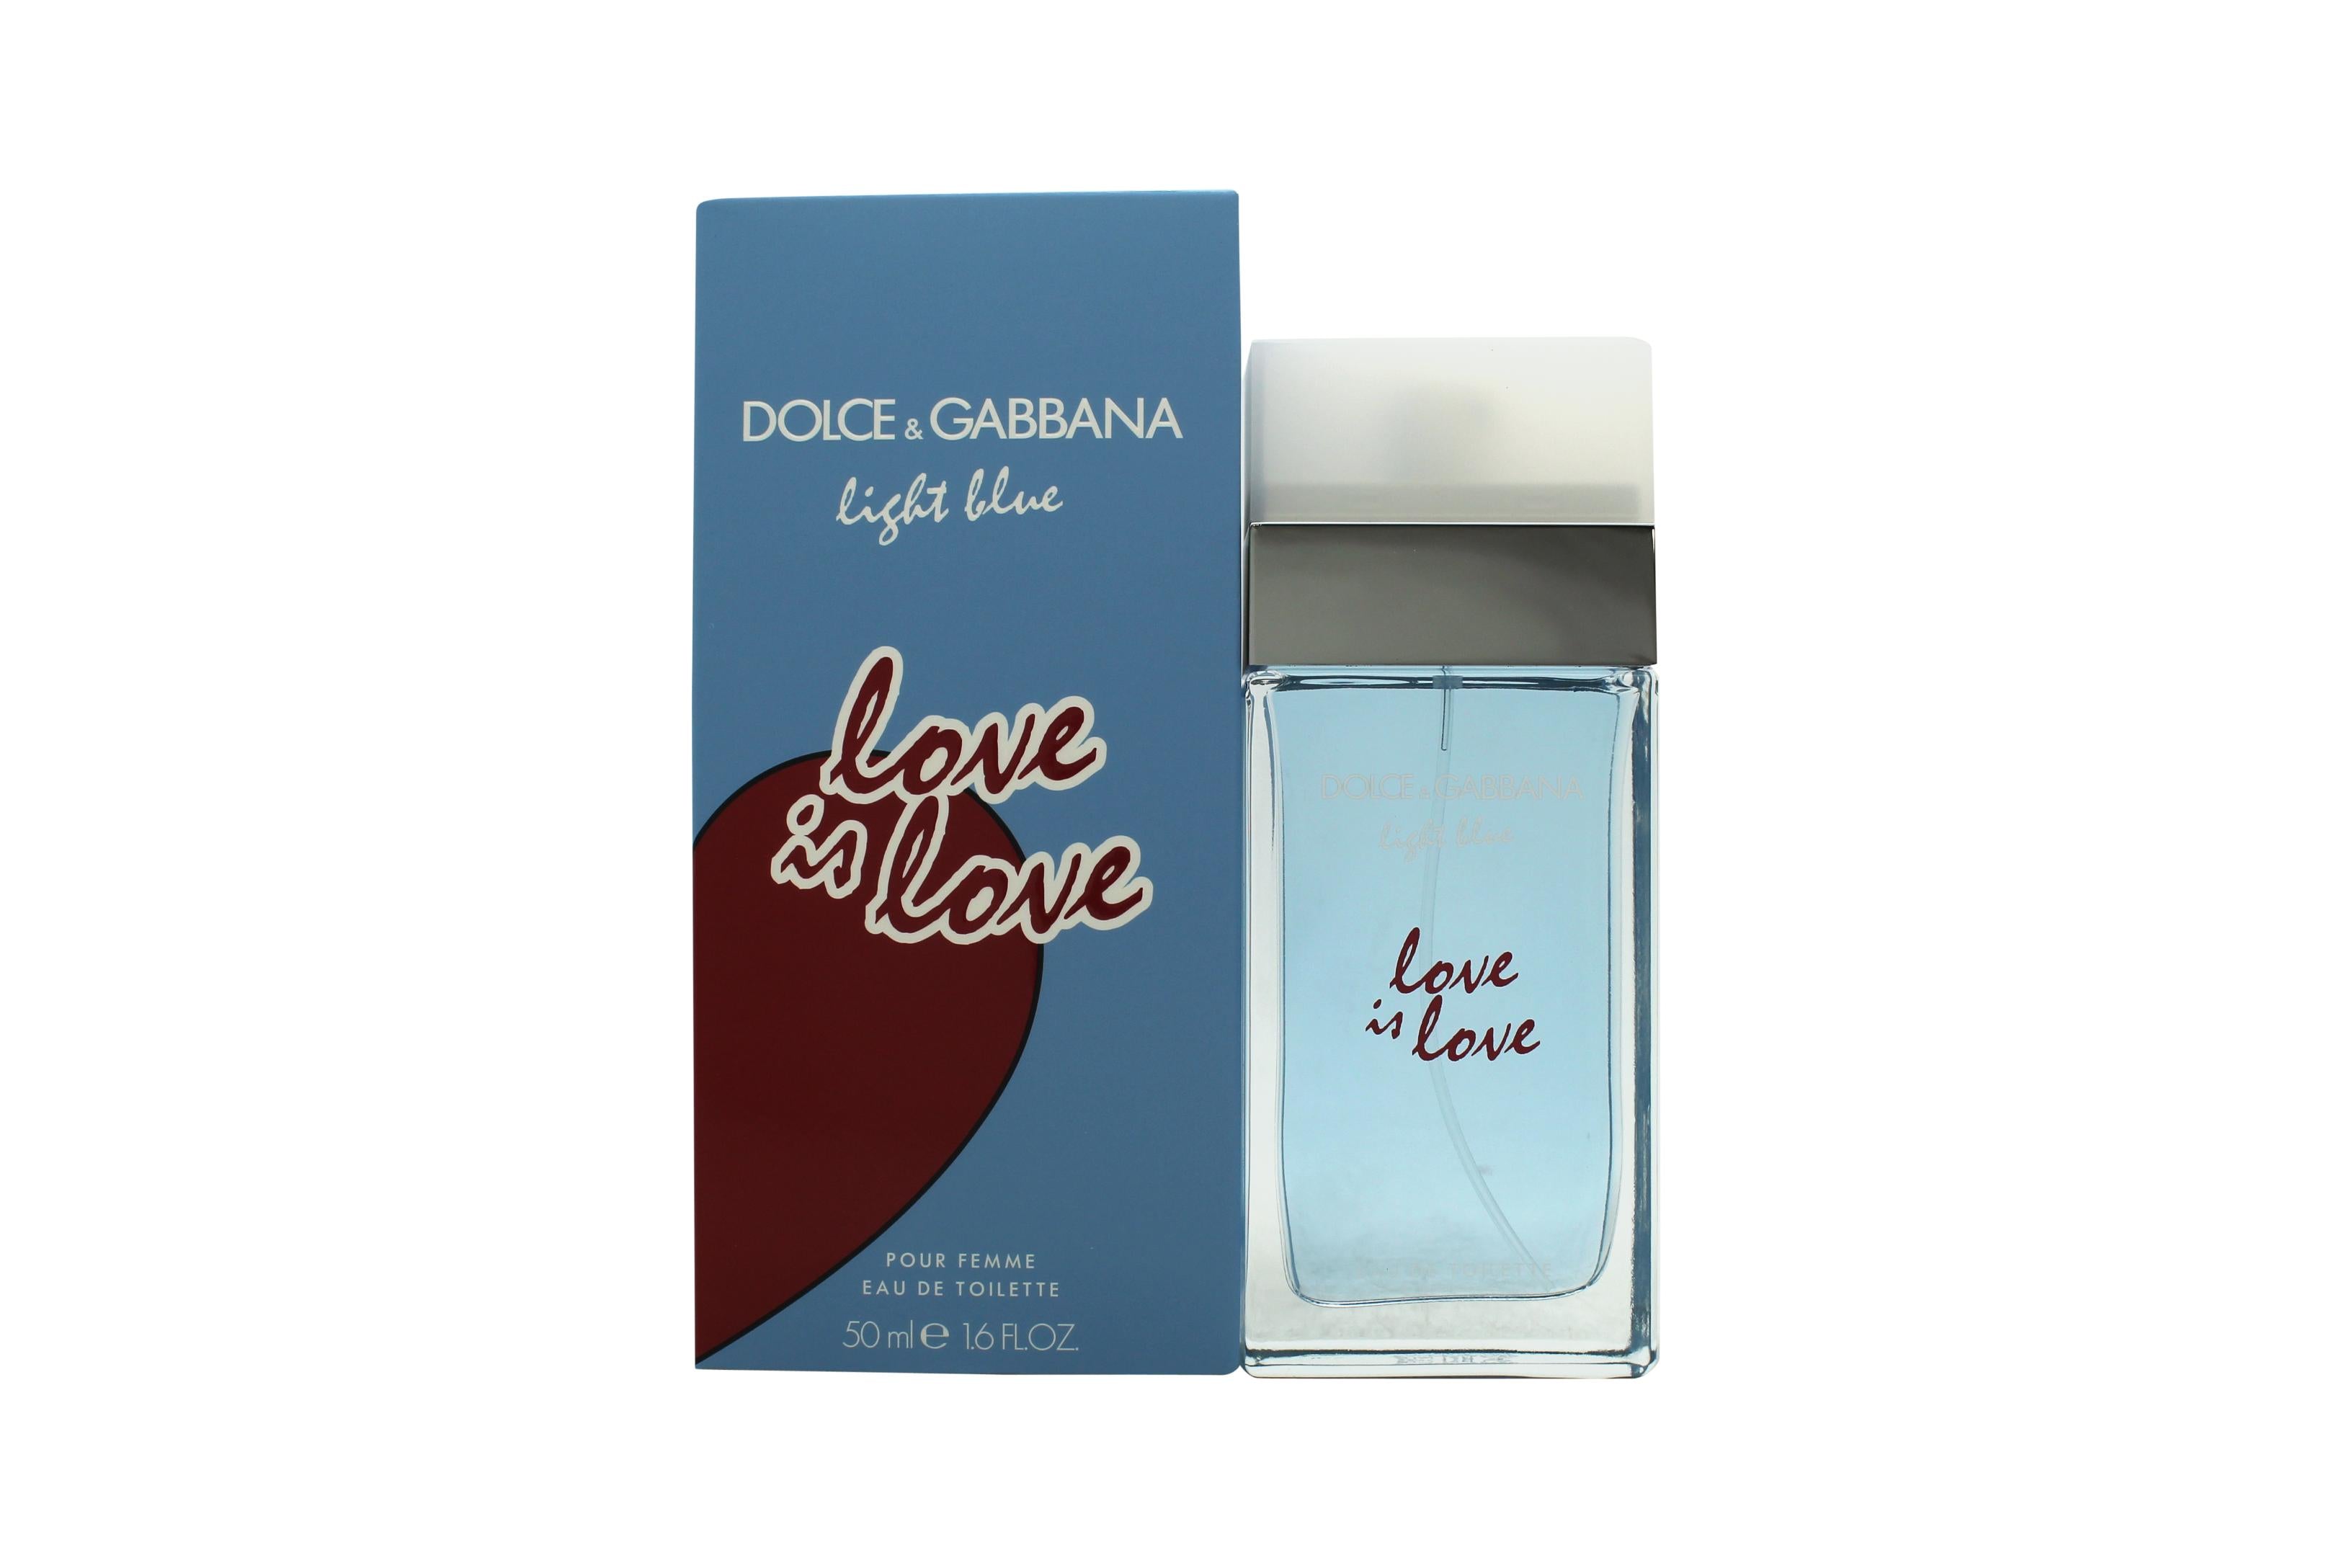 View Dolce Gabbana Light Blue Love is Love Eau de Toilette 50ml Spray information